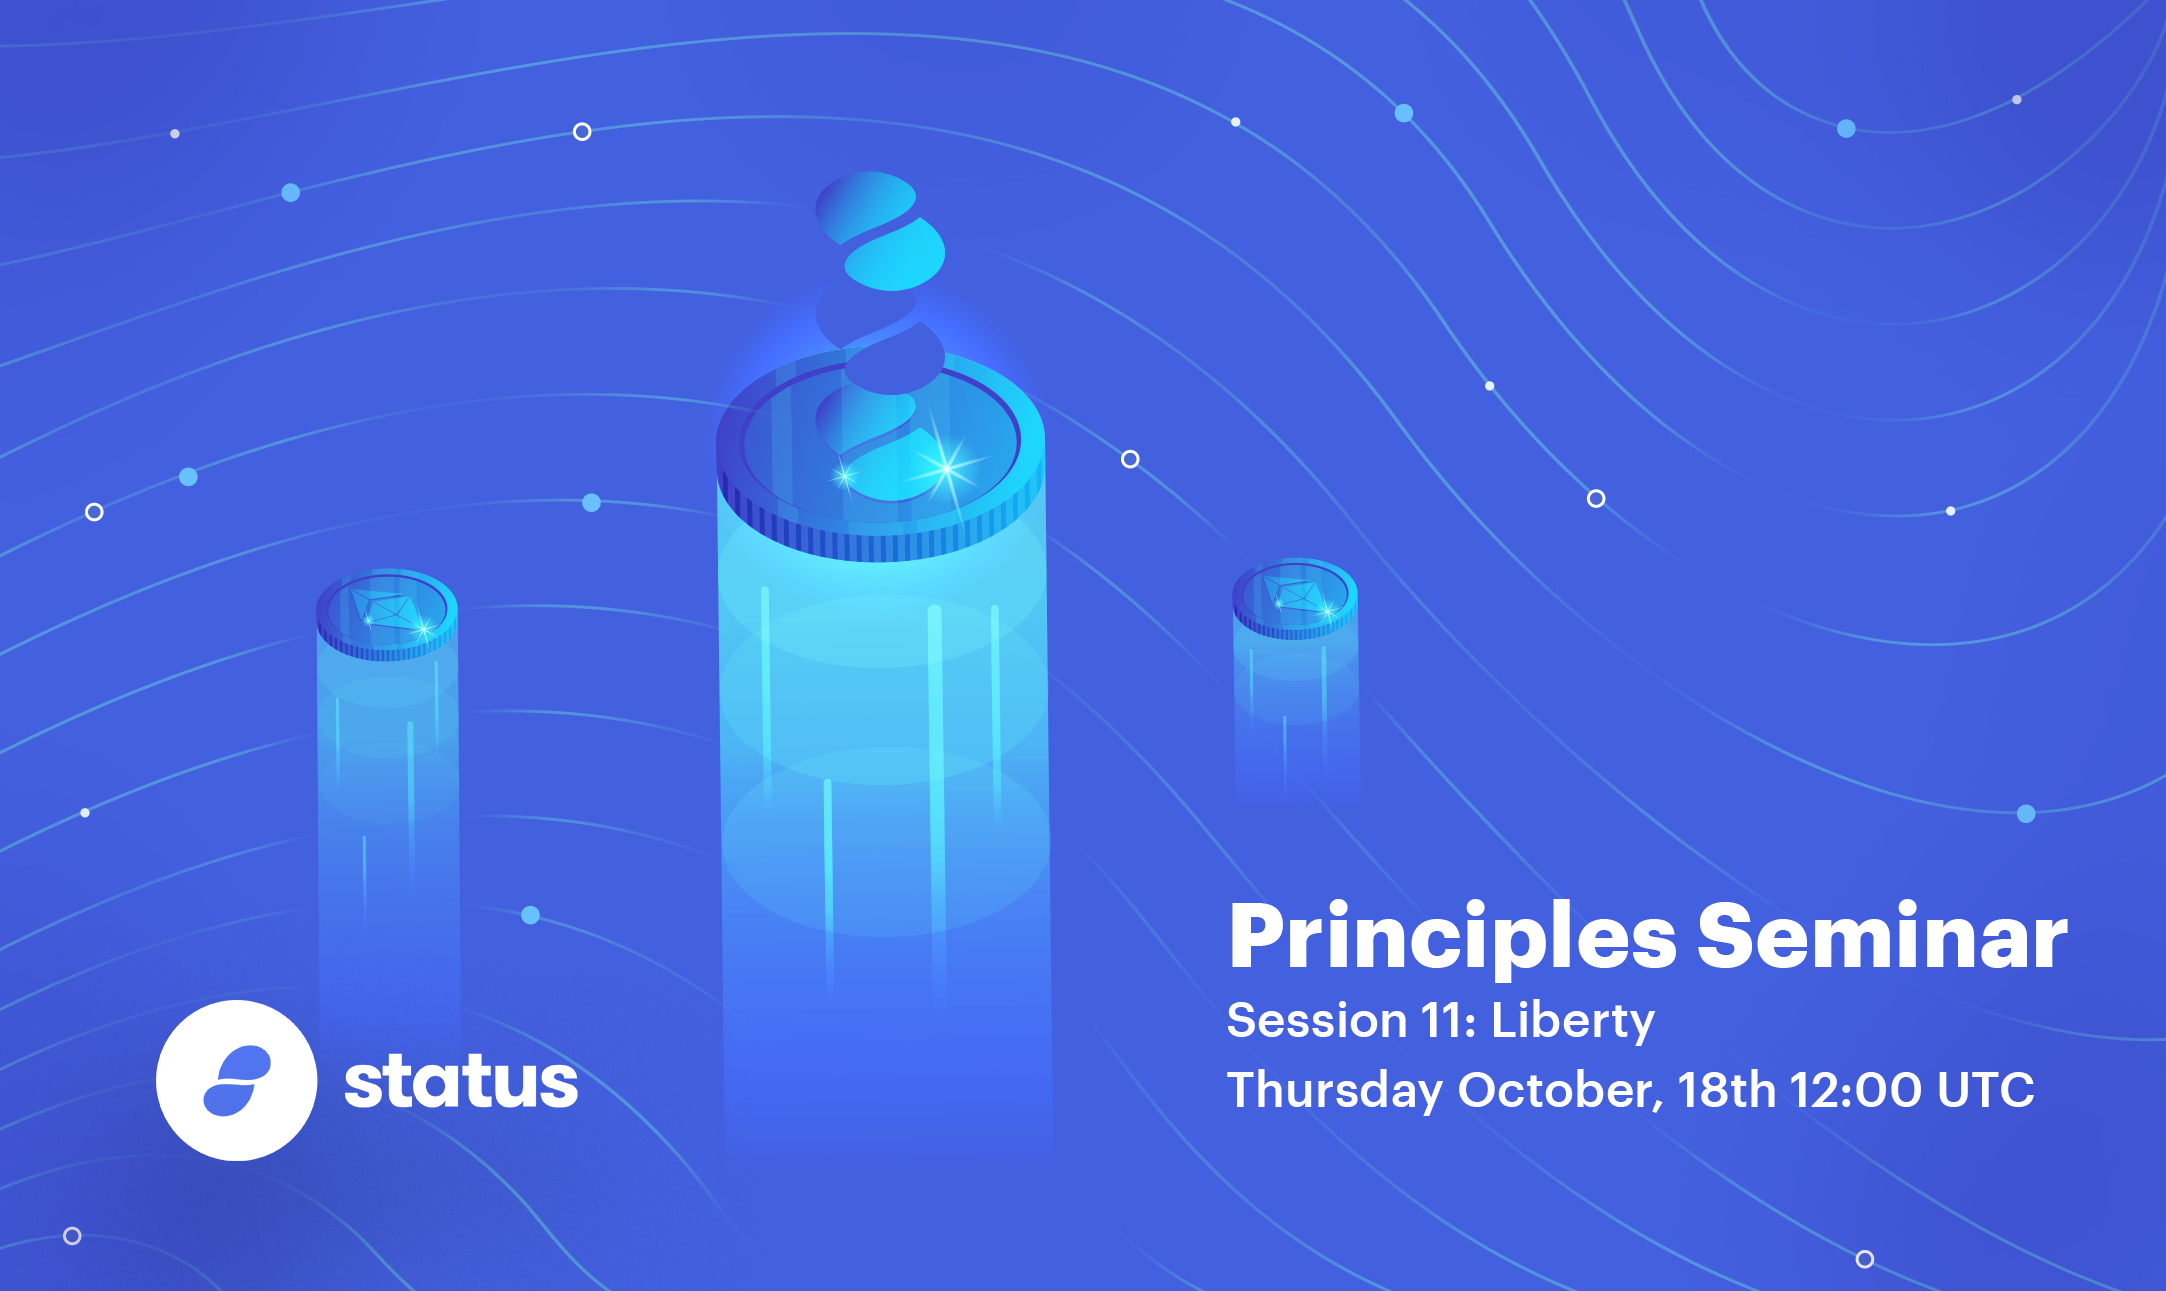 Principles Seminar - Session 11: Liberty